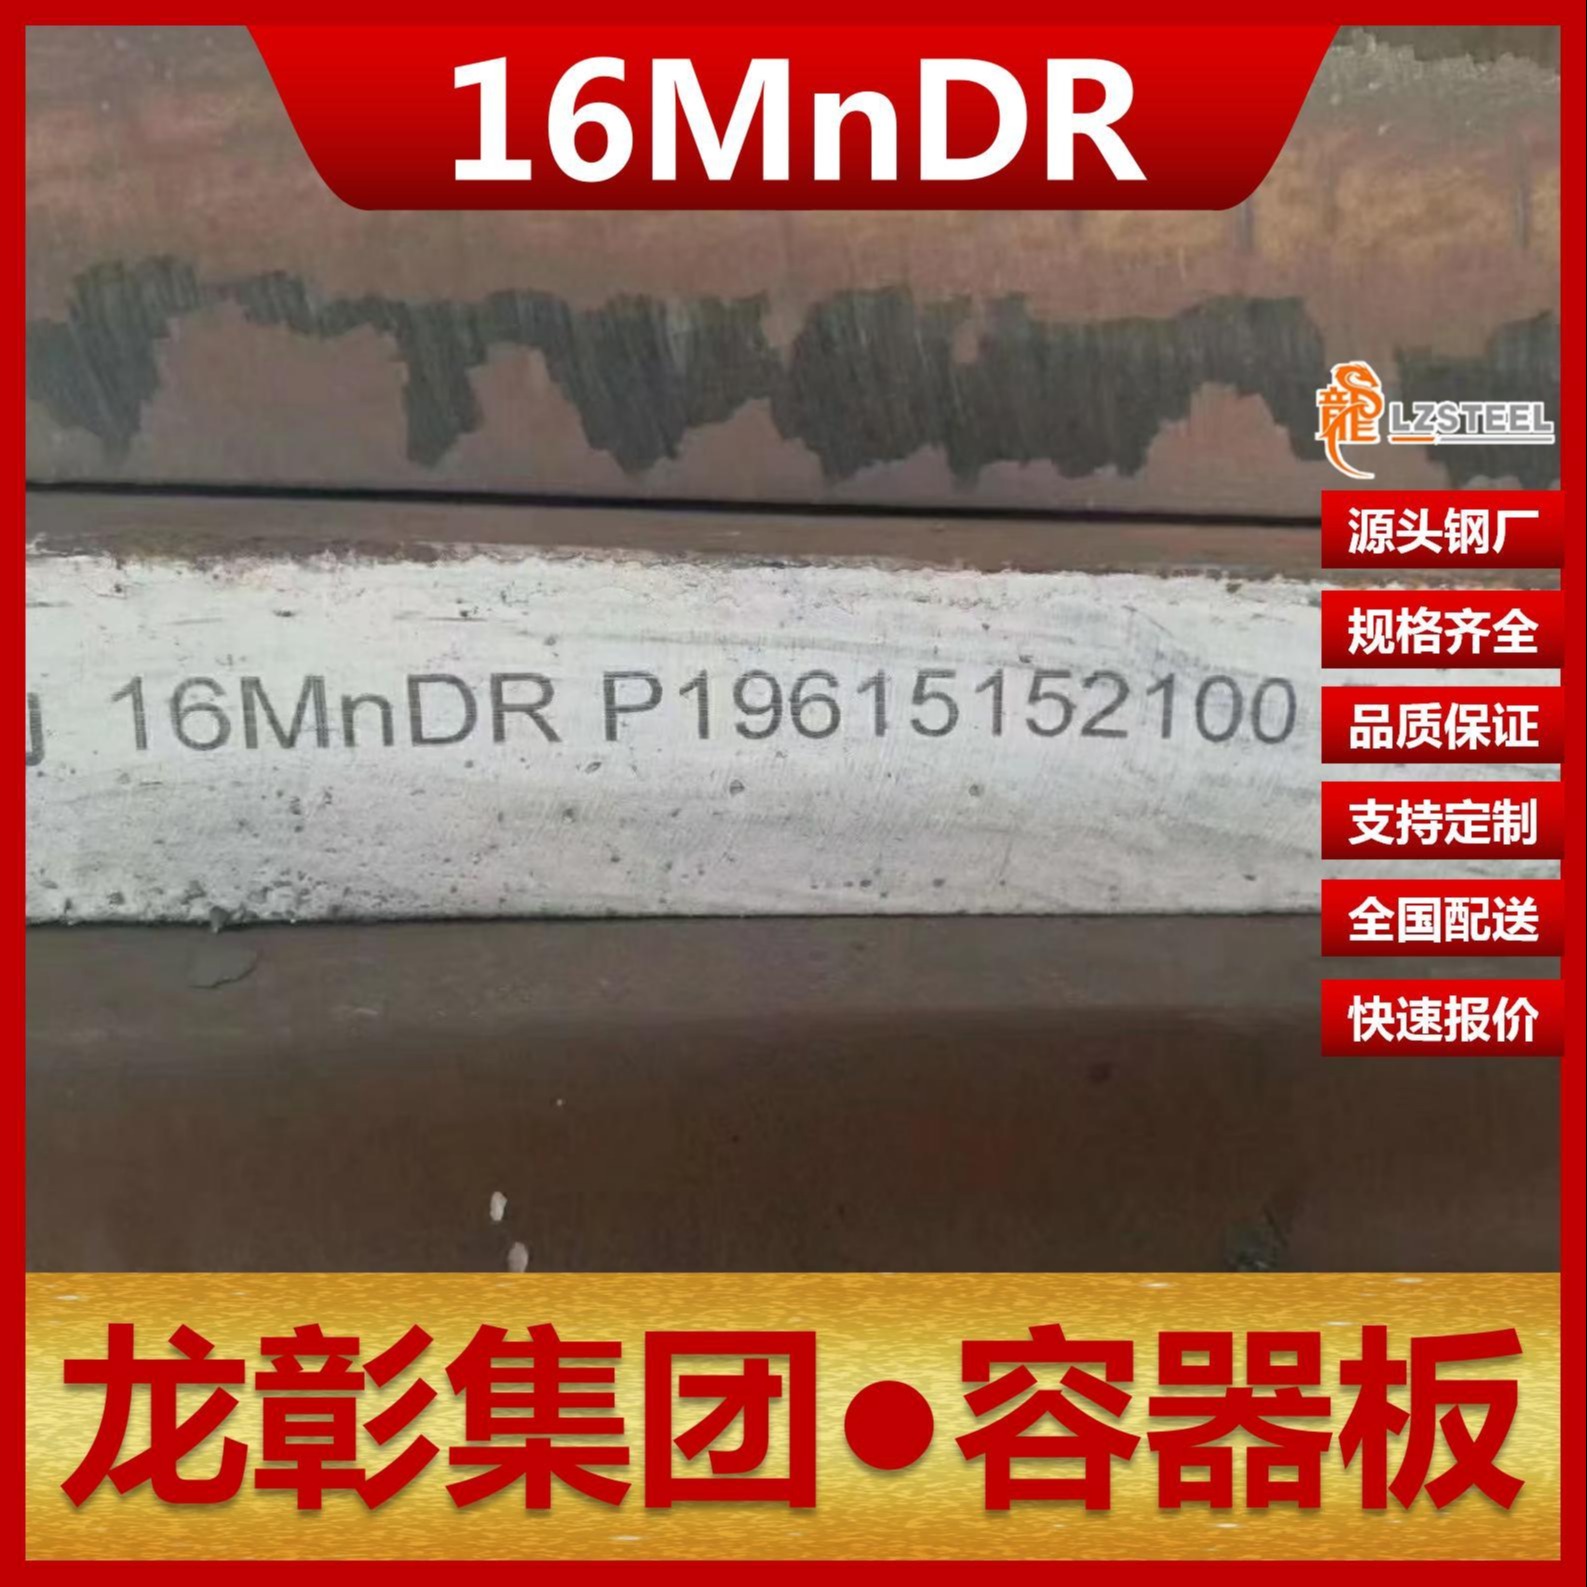 16MnDR容器板现货批零 龙彰集团主营钢板16MnDR压力容器板可开平分条图片